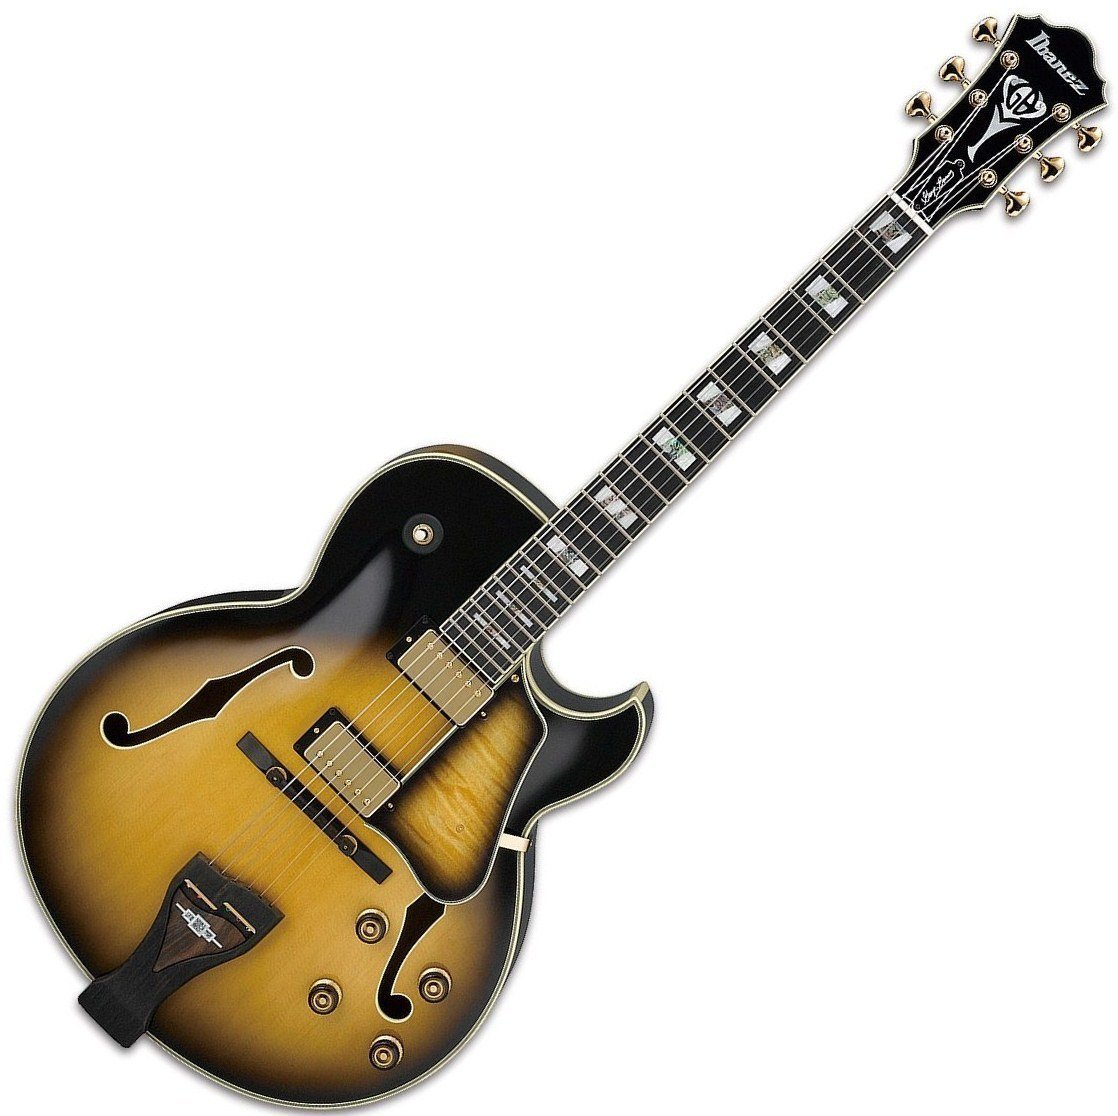 Semiakustická kytara Ibanez LGB300-VYS Vintage Yellow Sunburst